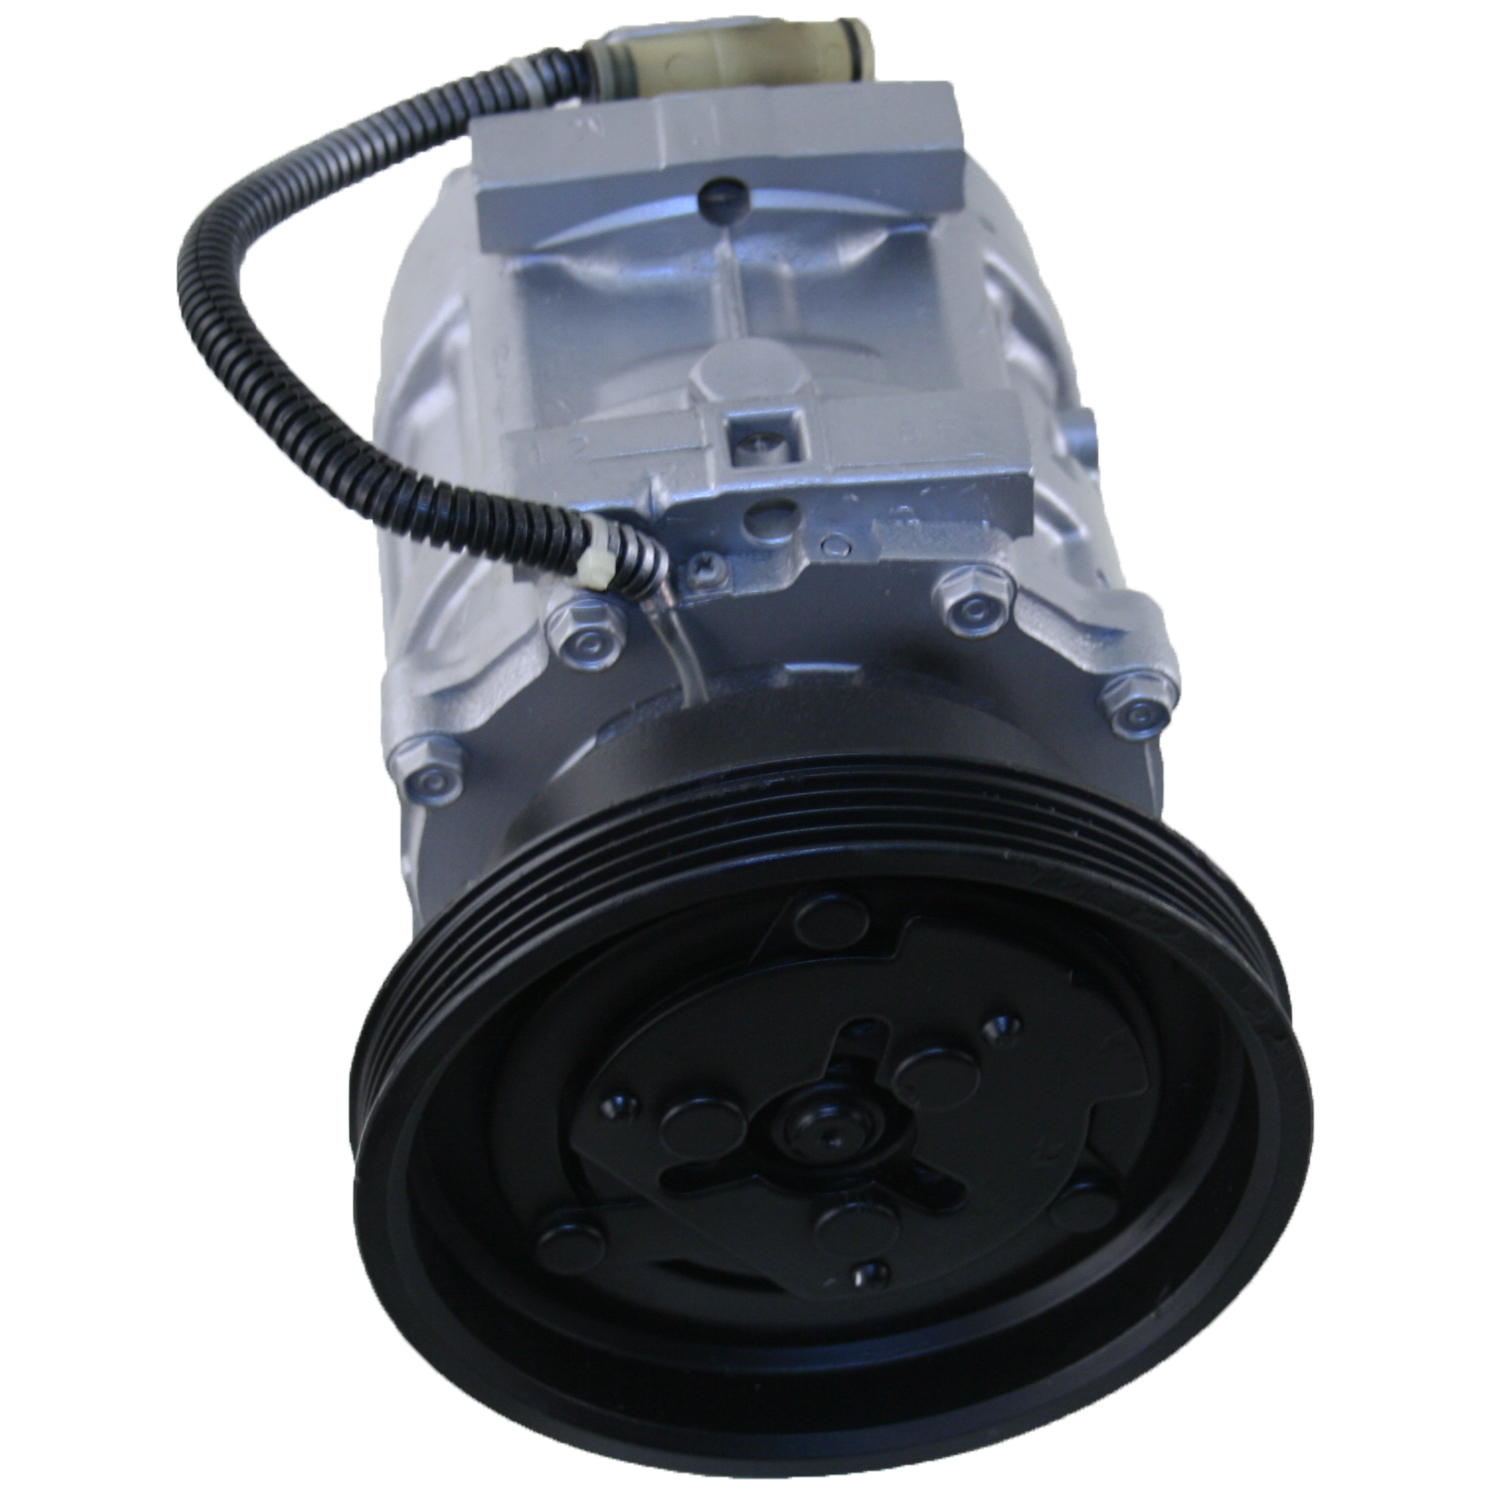 TCW Compressor 40255.401 Remanufactured Product Image field_60b6a13a6e67c